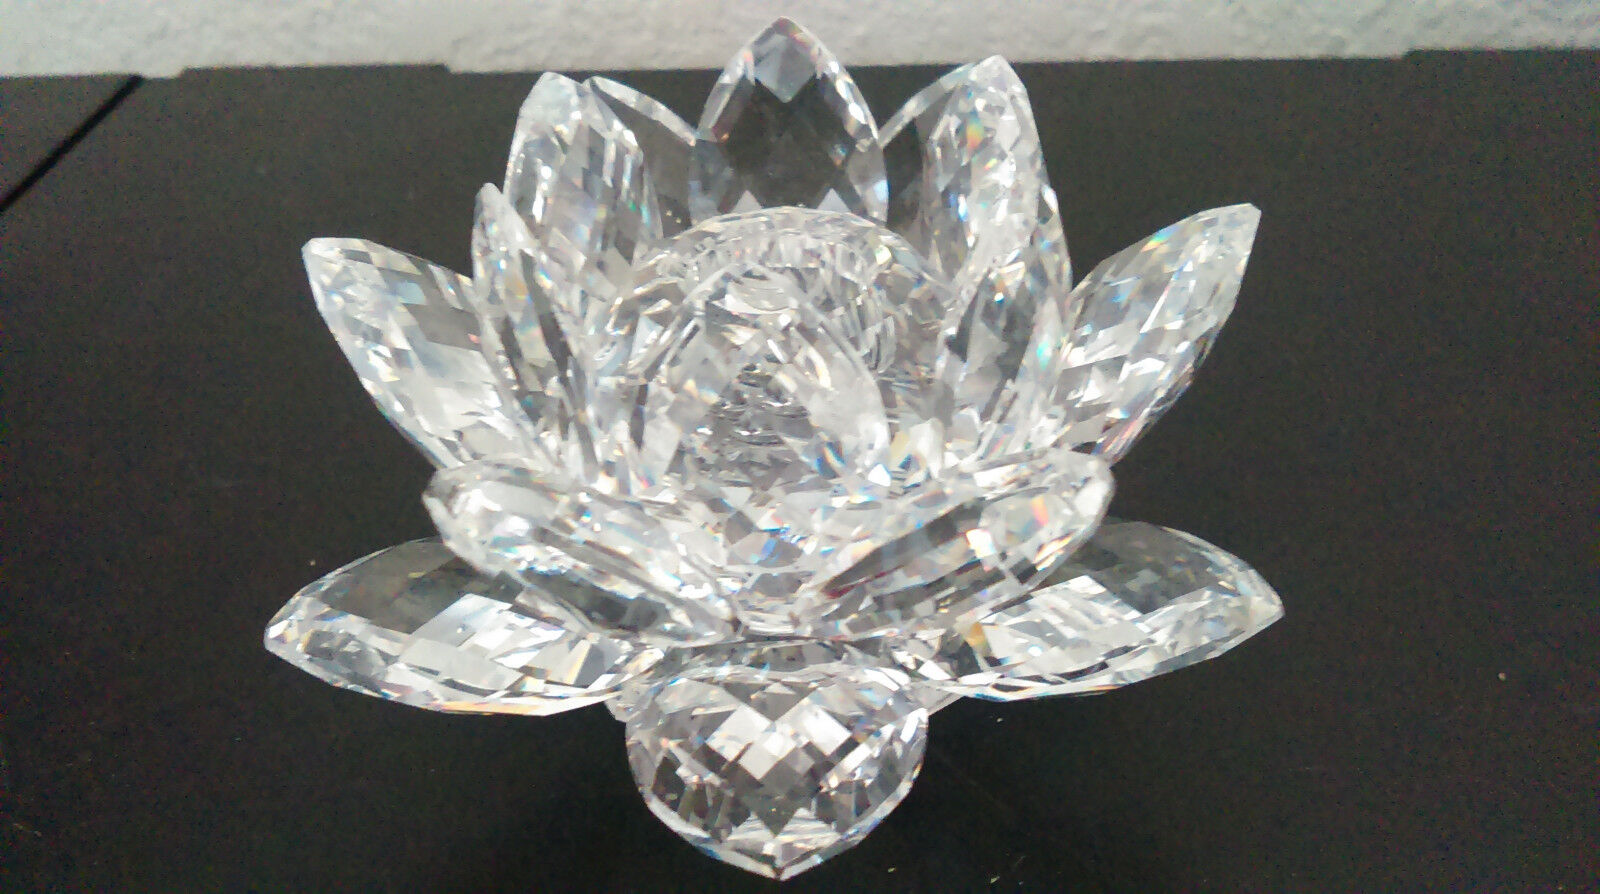 Swarovski Crystal Water Lily Candle Holder - Large